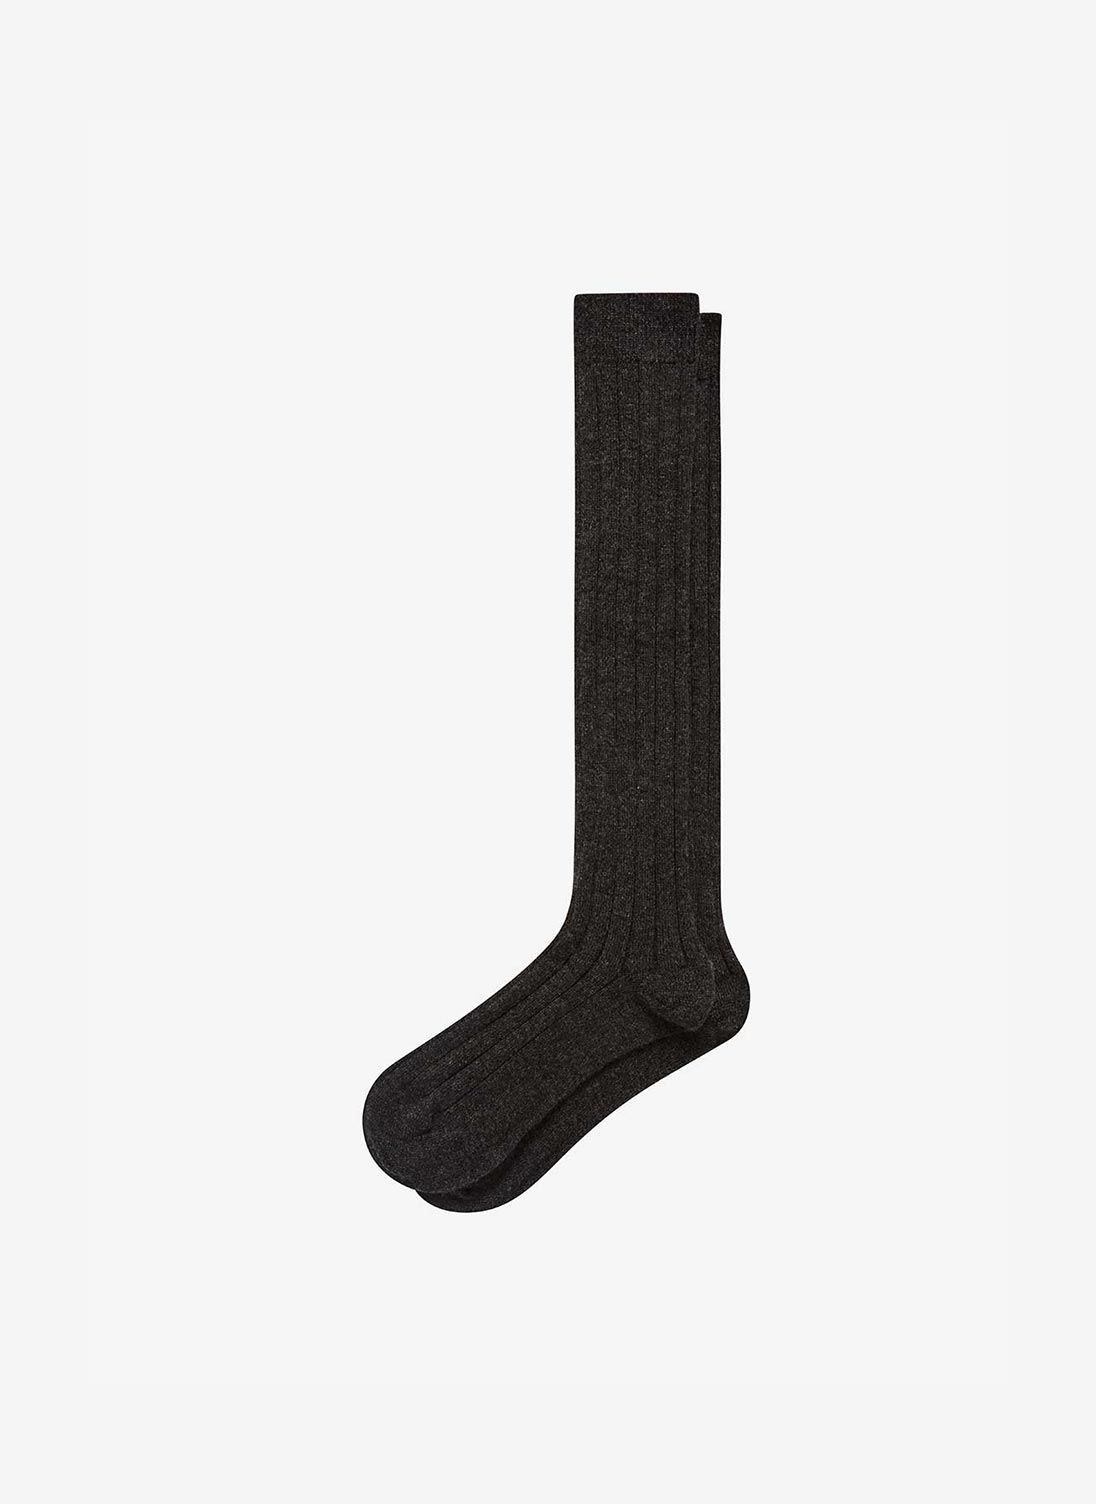 Men's Cashmere Long Socks Charcoal